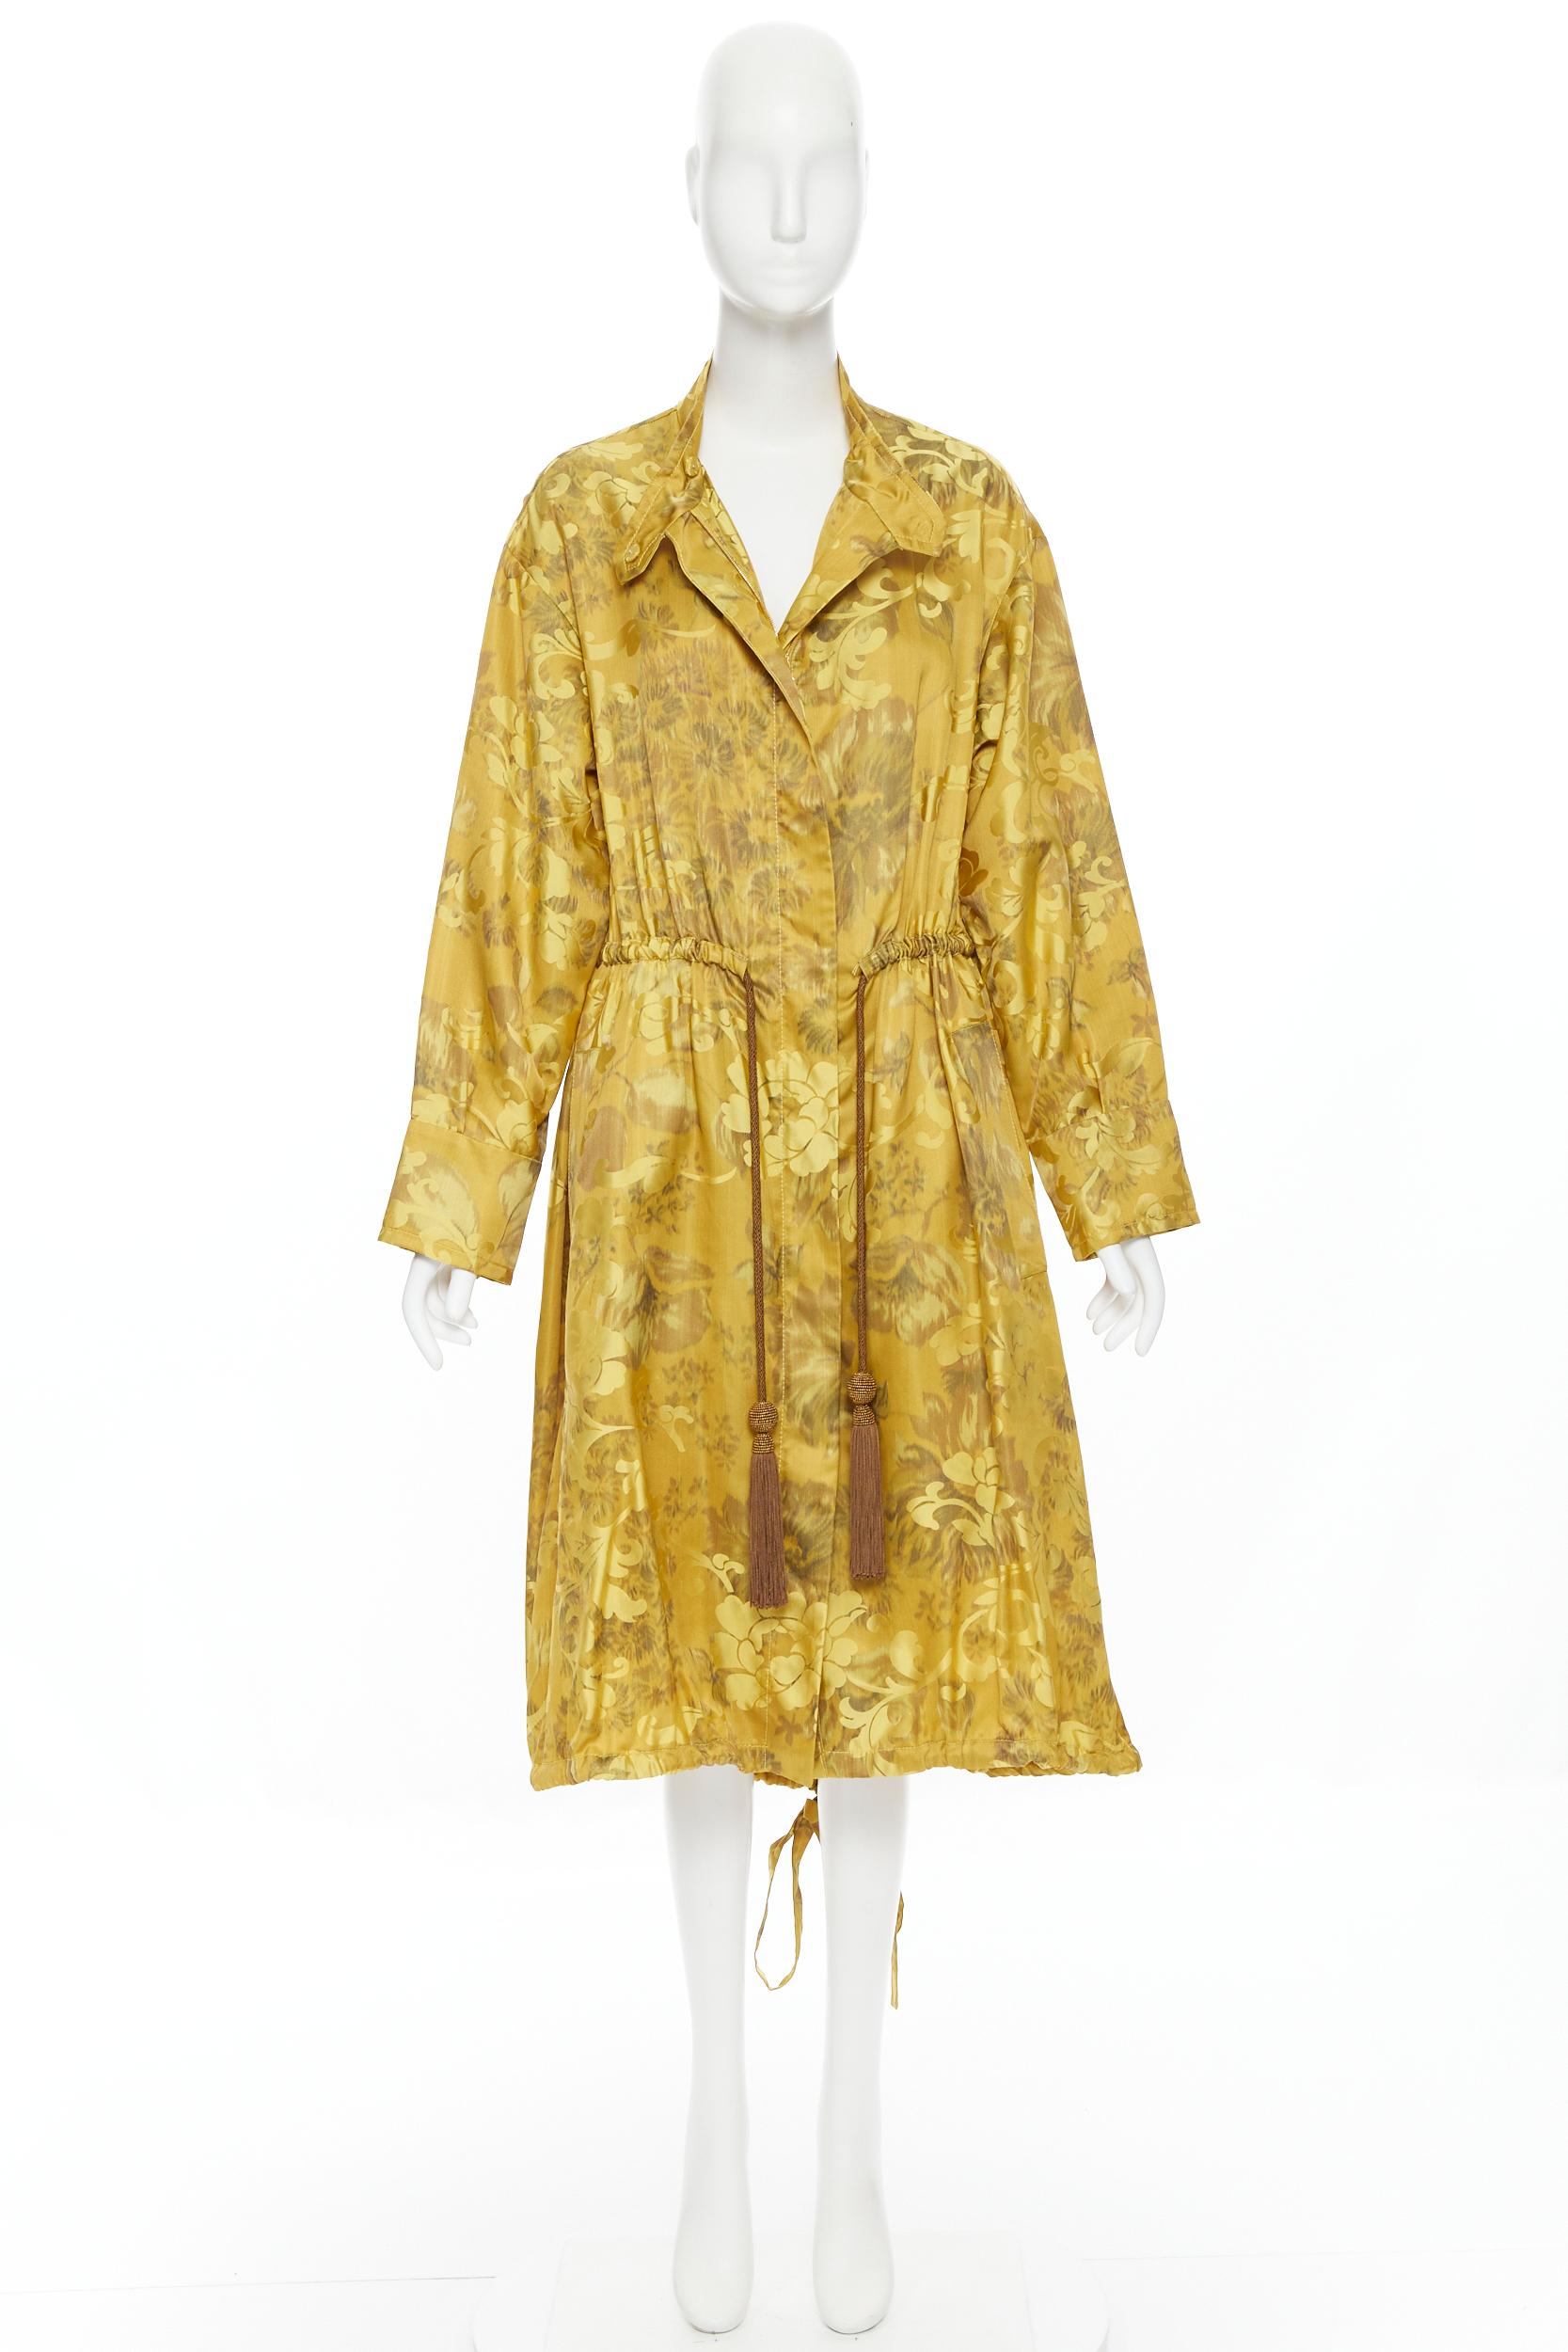 Brown OSCAR DE LA RENTA 2019 100% silk oriental floral tassel drawstring robe coat S